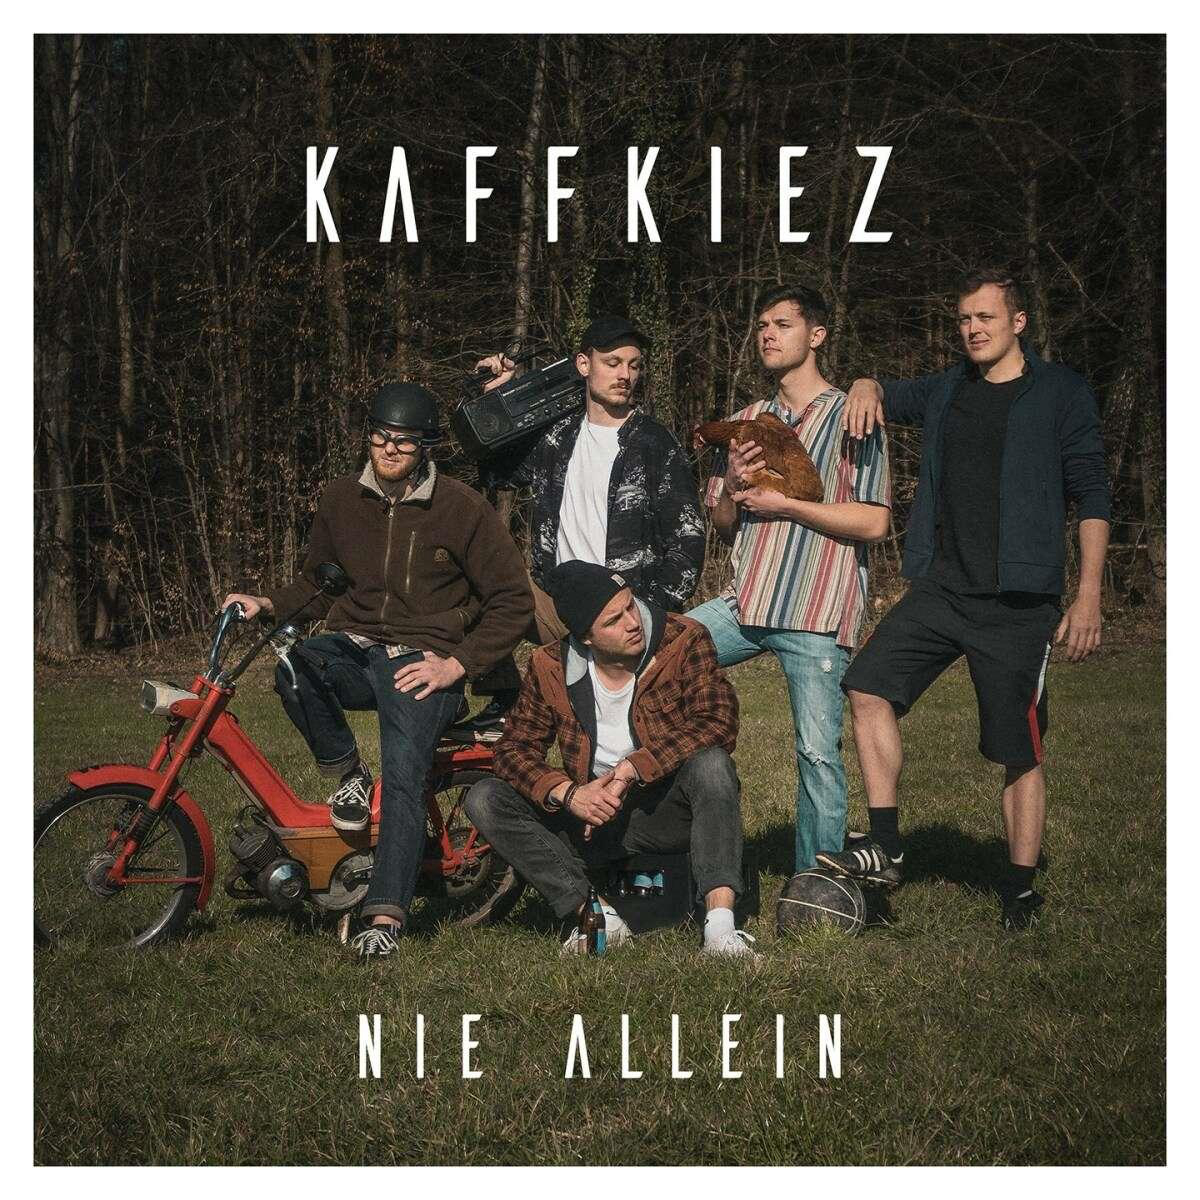 - Kaffkiez Allein - (Black Nie Vinyl) (Vinyl)